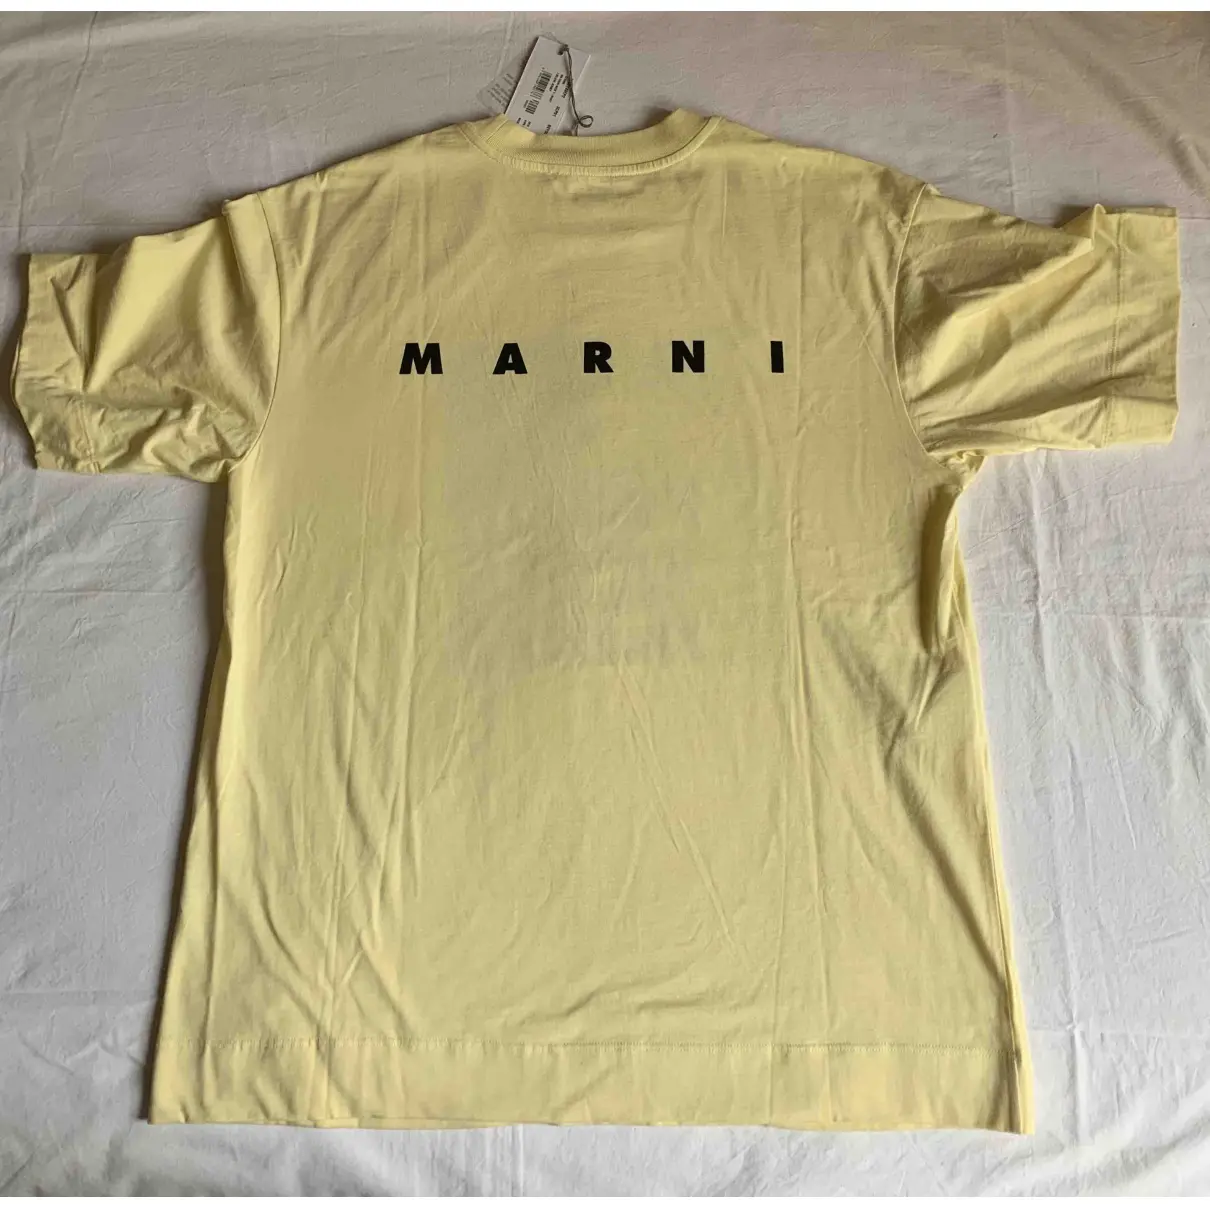 Buy Marni Yellow Cotton Top online